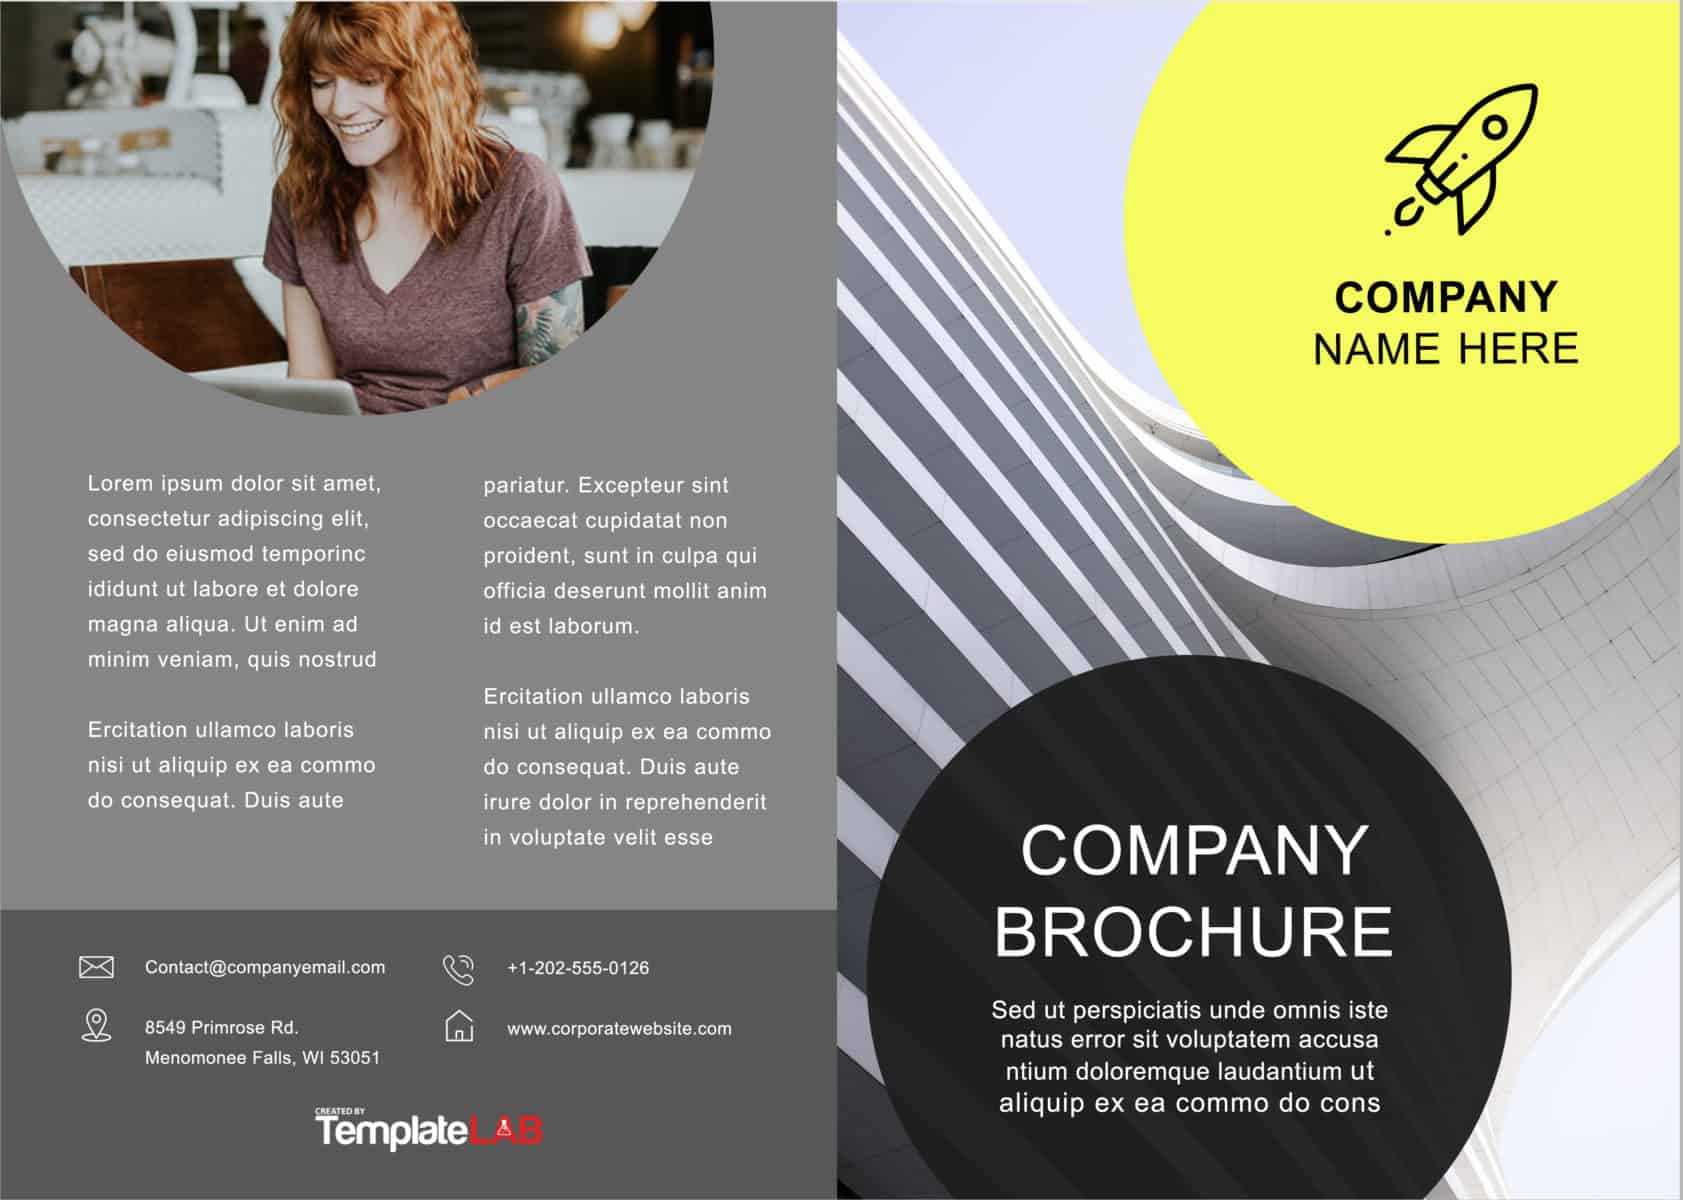 33 Free Brochure Templates (Word + Pdf) ᐅ Templatelab With Free Brochure Templates For Word 2010